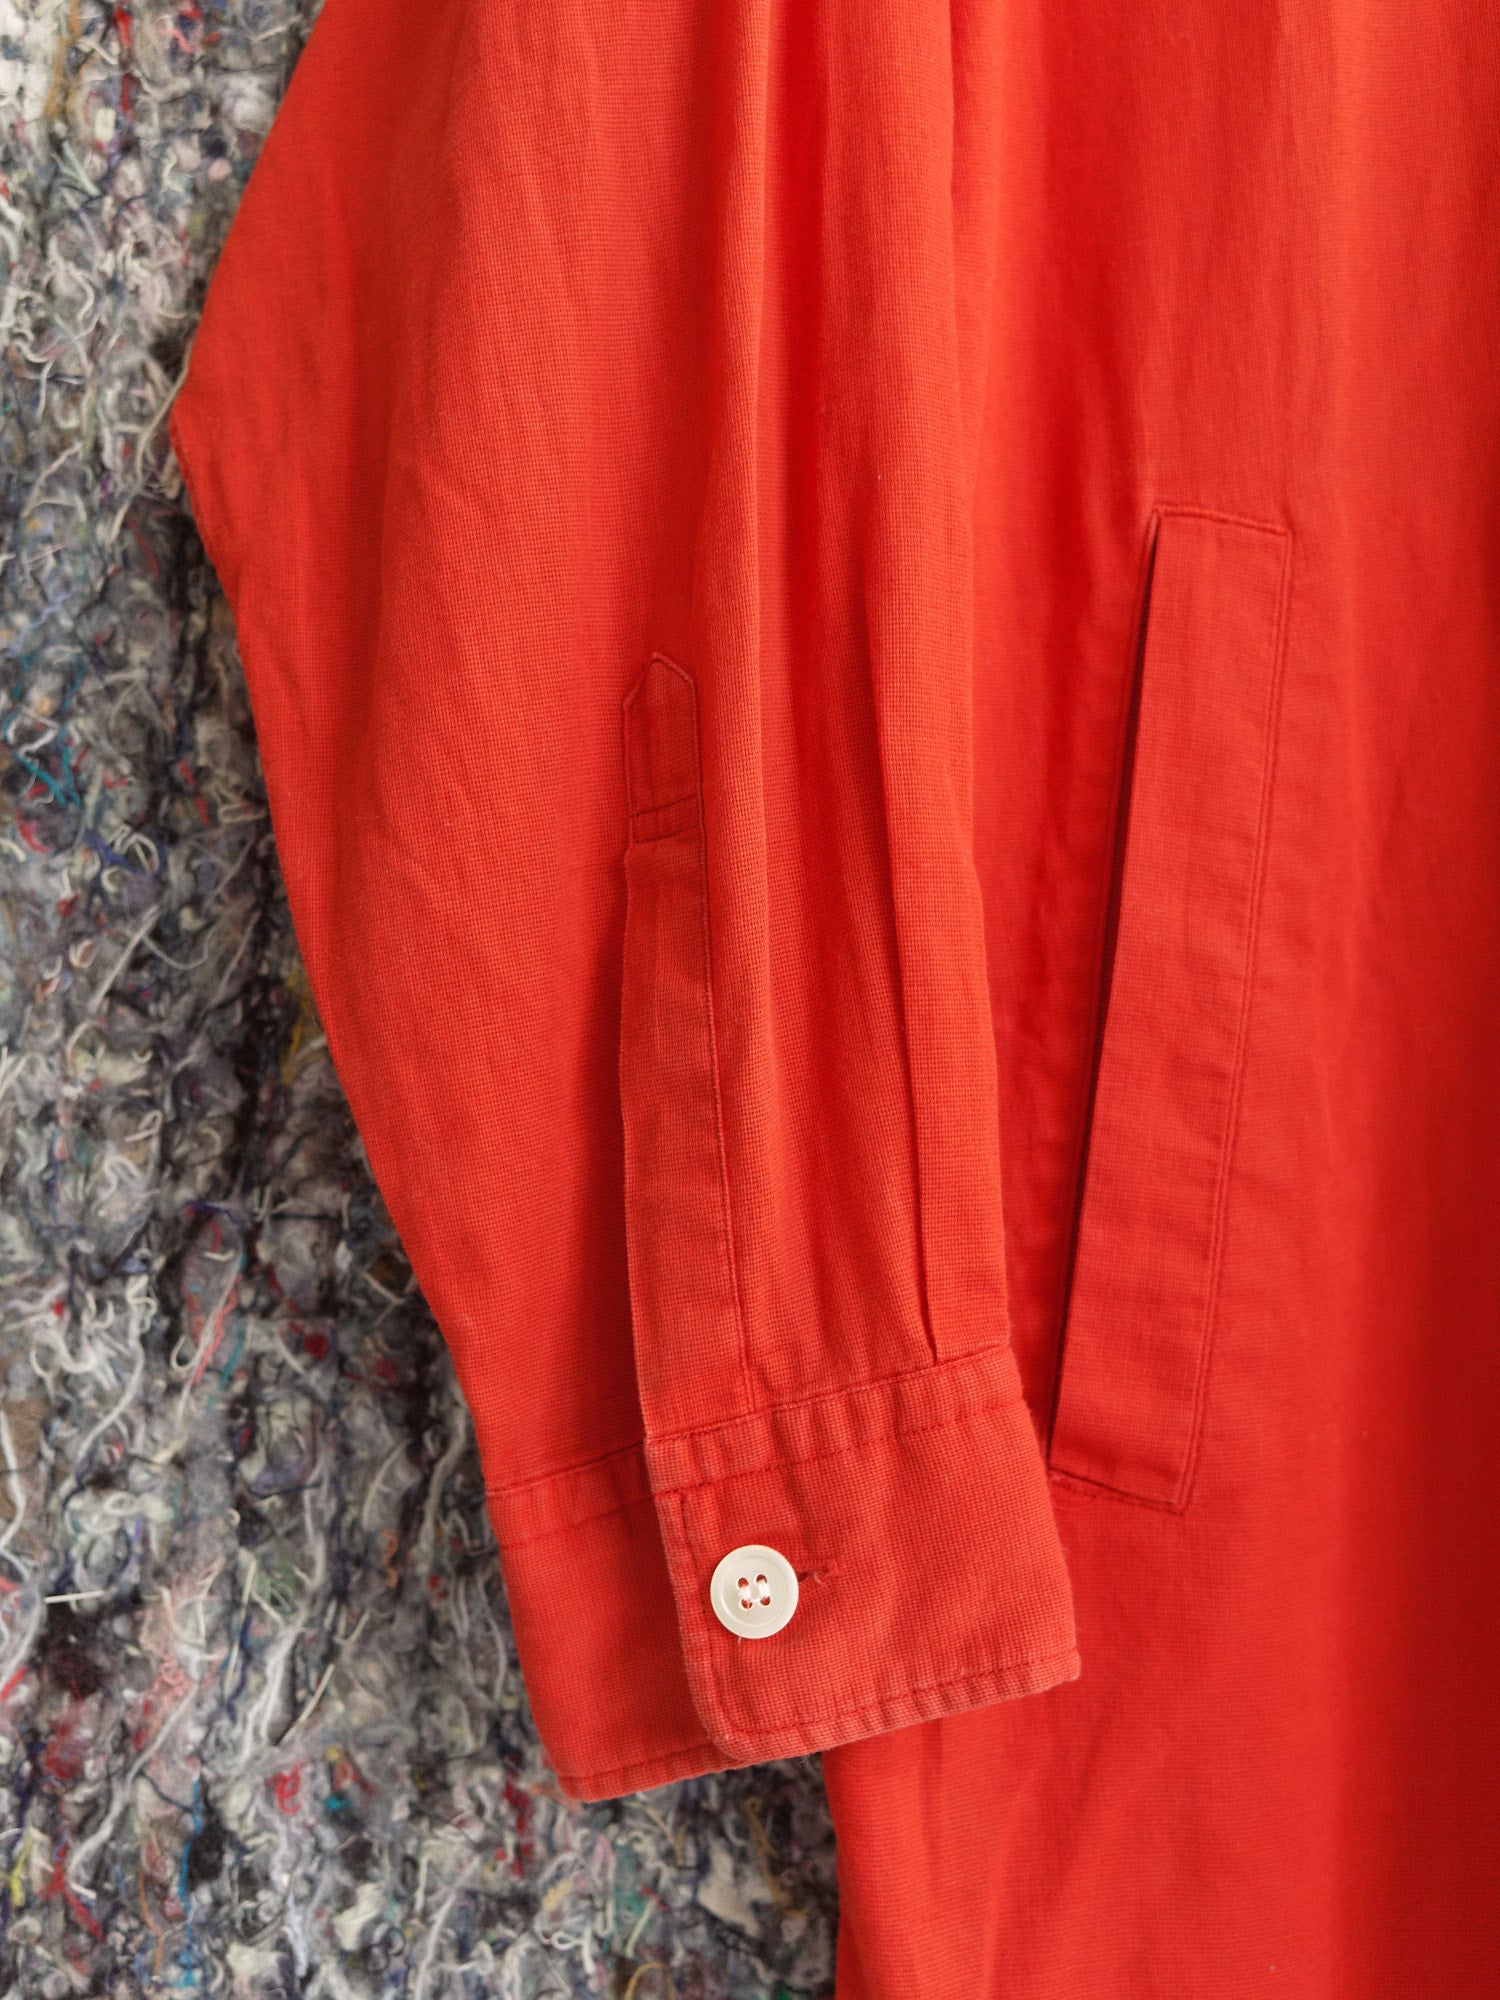 Comme des Garcons Homme 1997 red cotton drawstring hem zip jacket - approx M